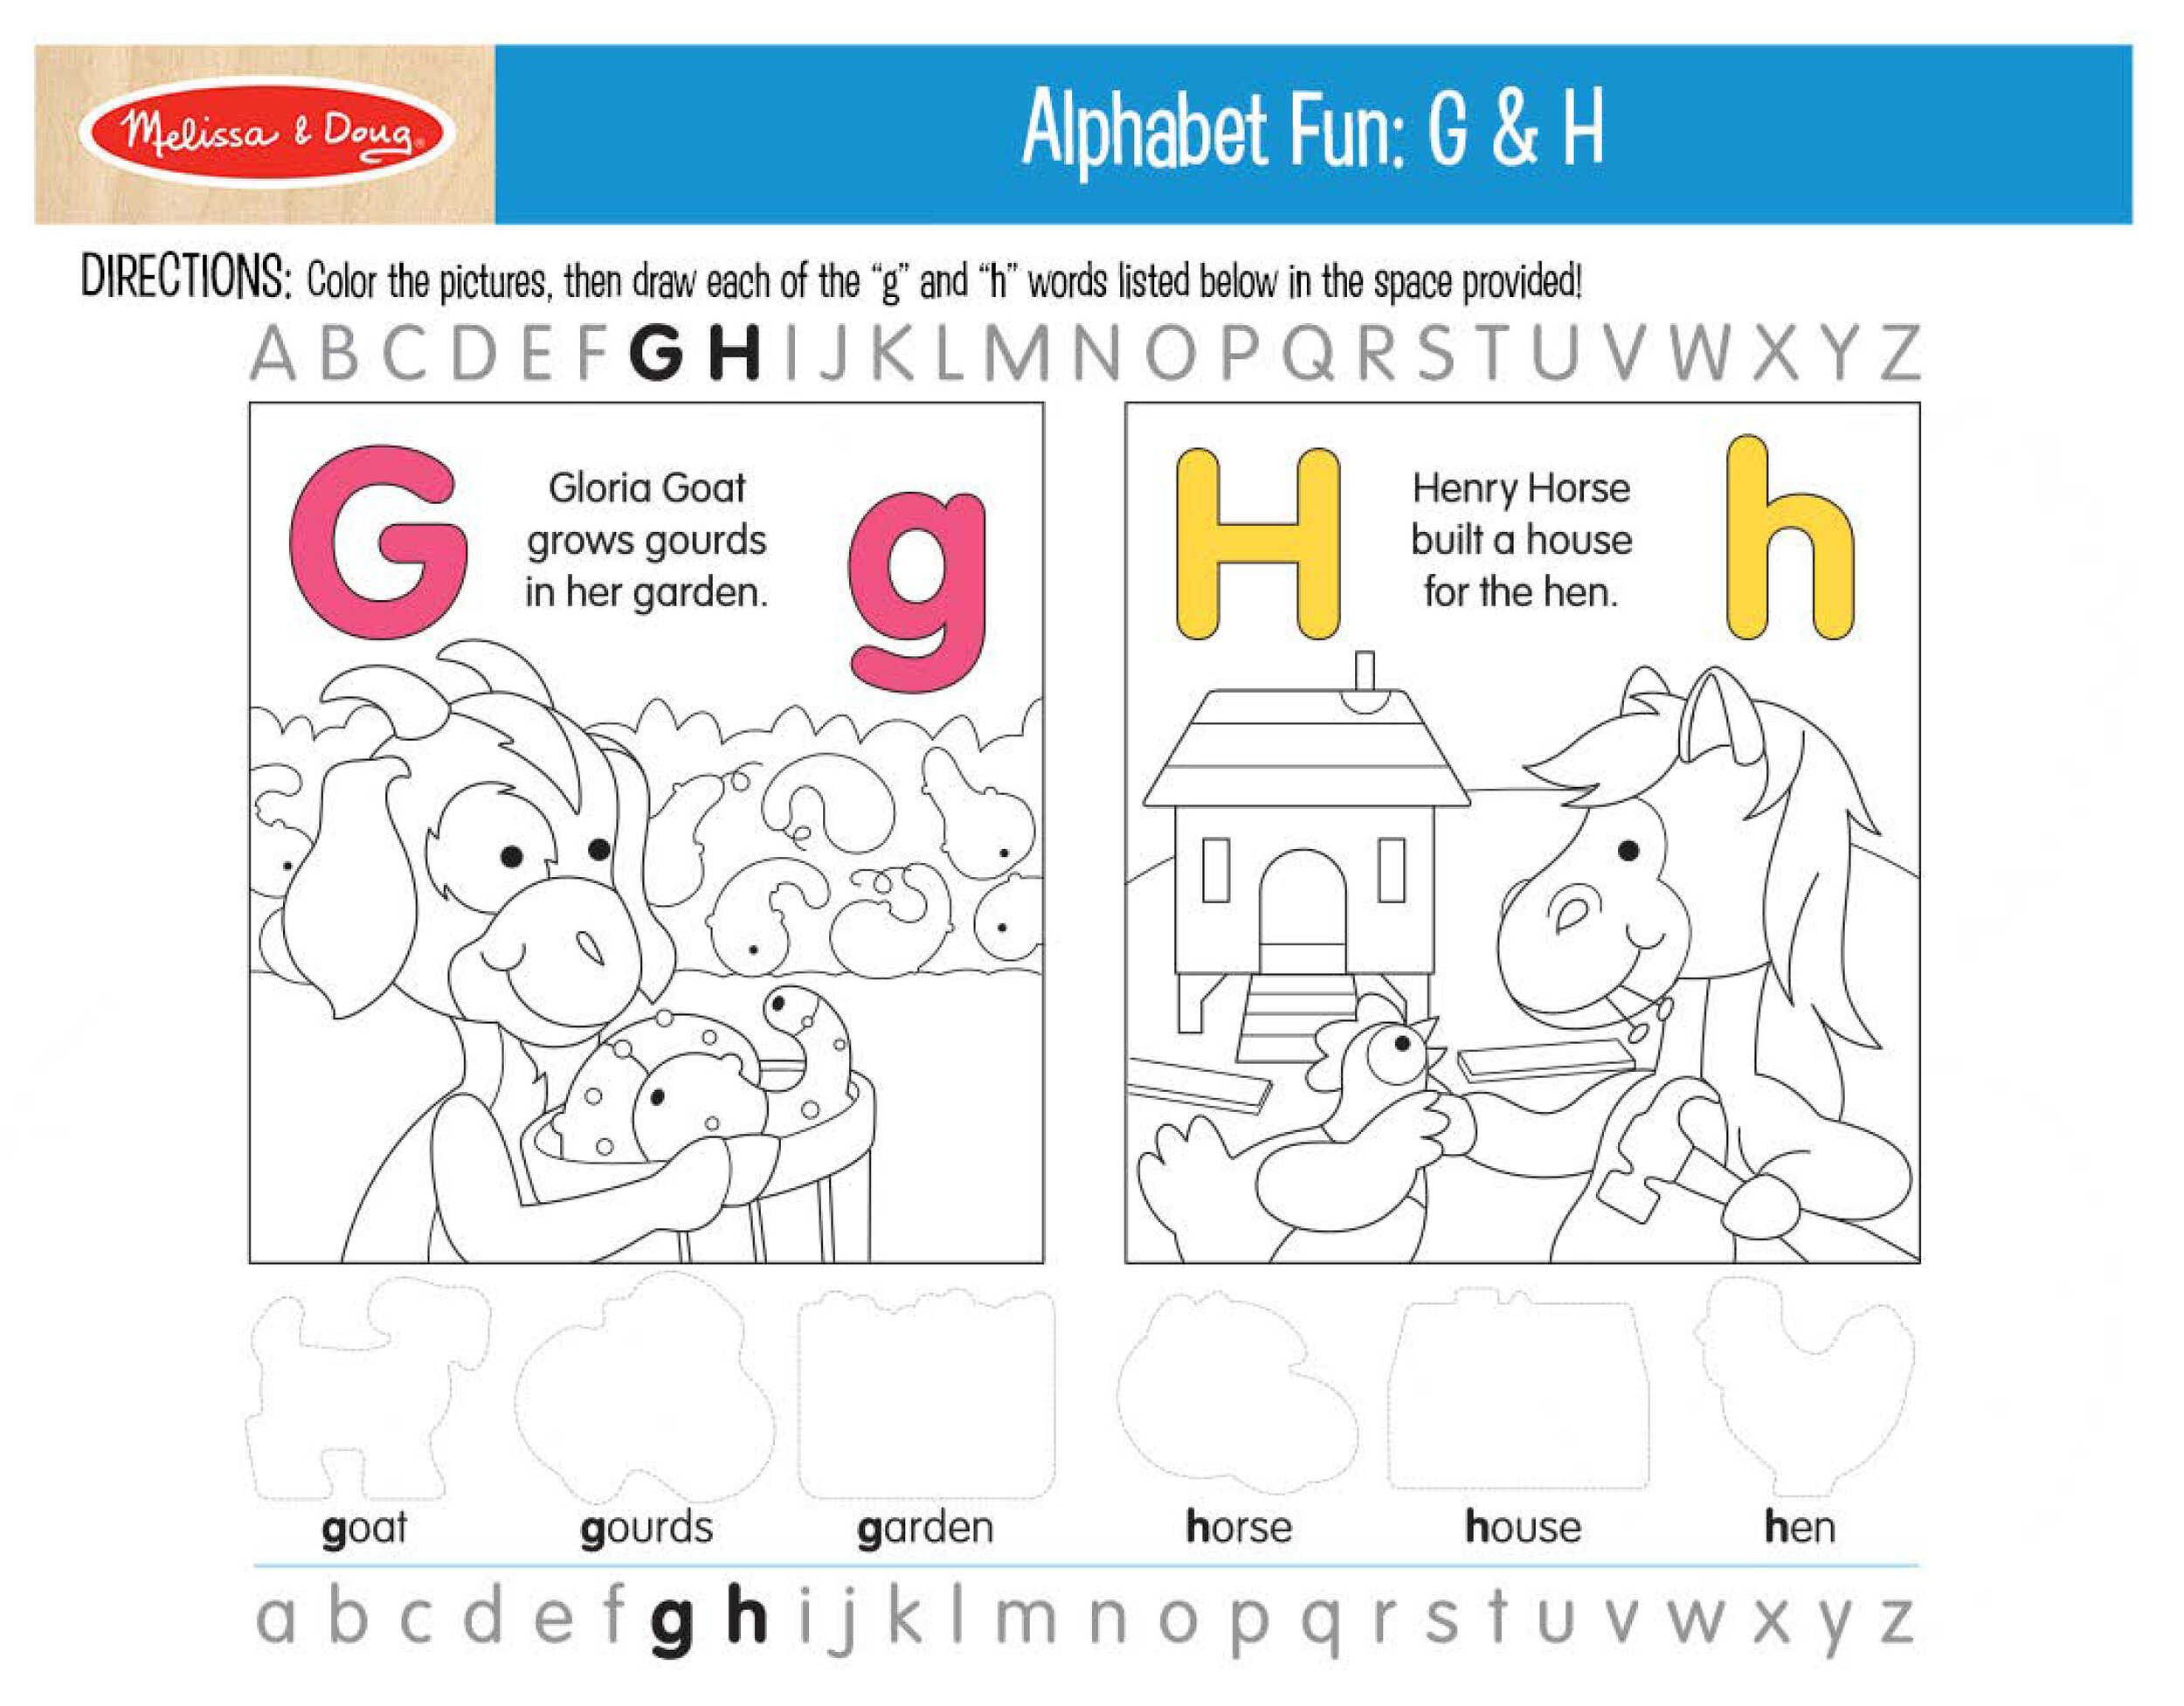 Printable_AlphabetFun-GH.jpg